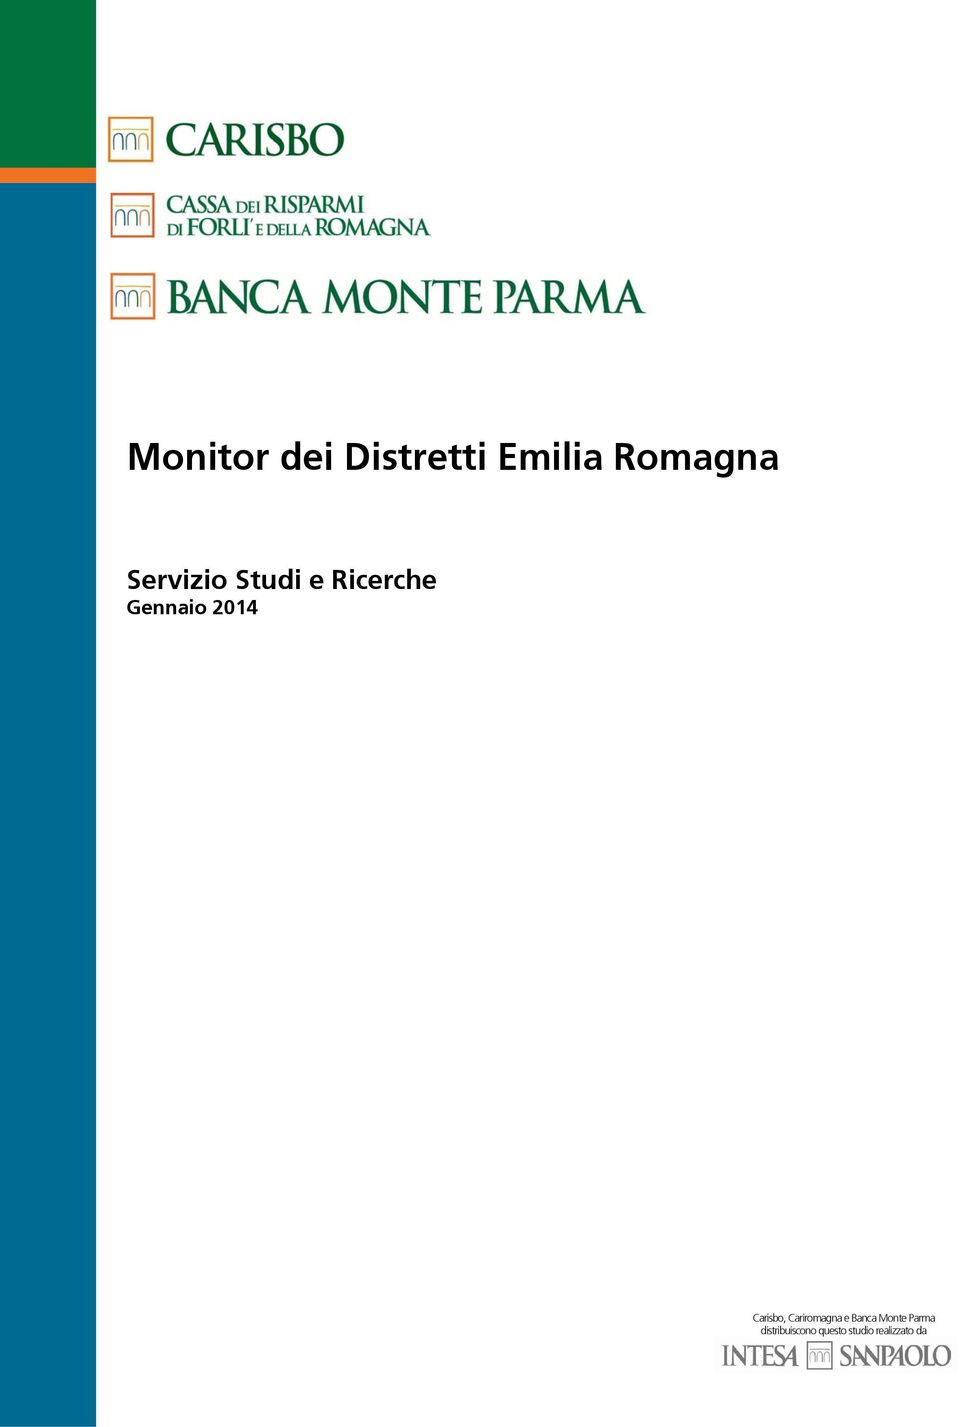 Cariromagna e Banca Monte Parma